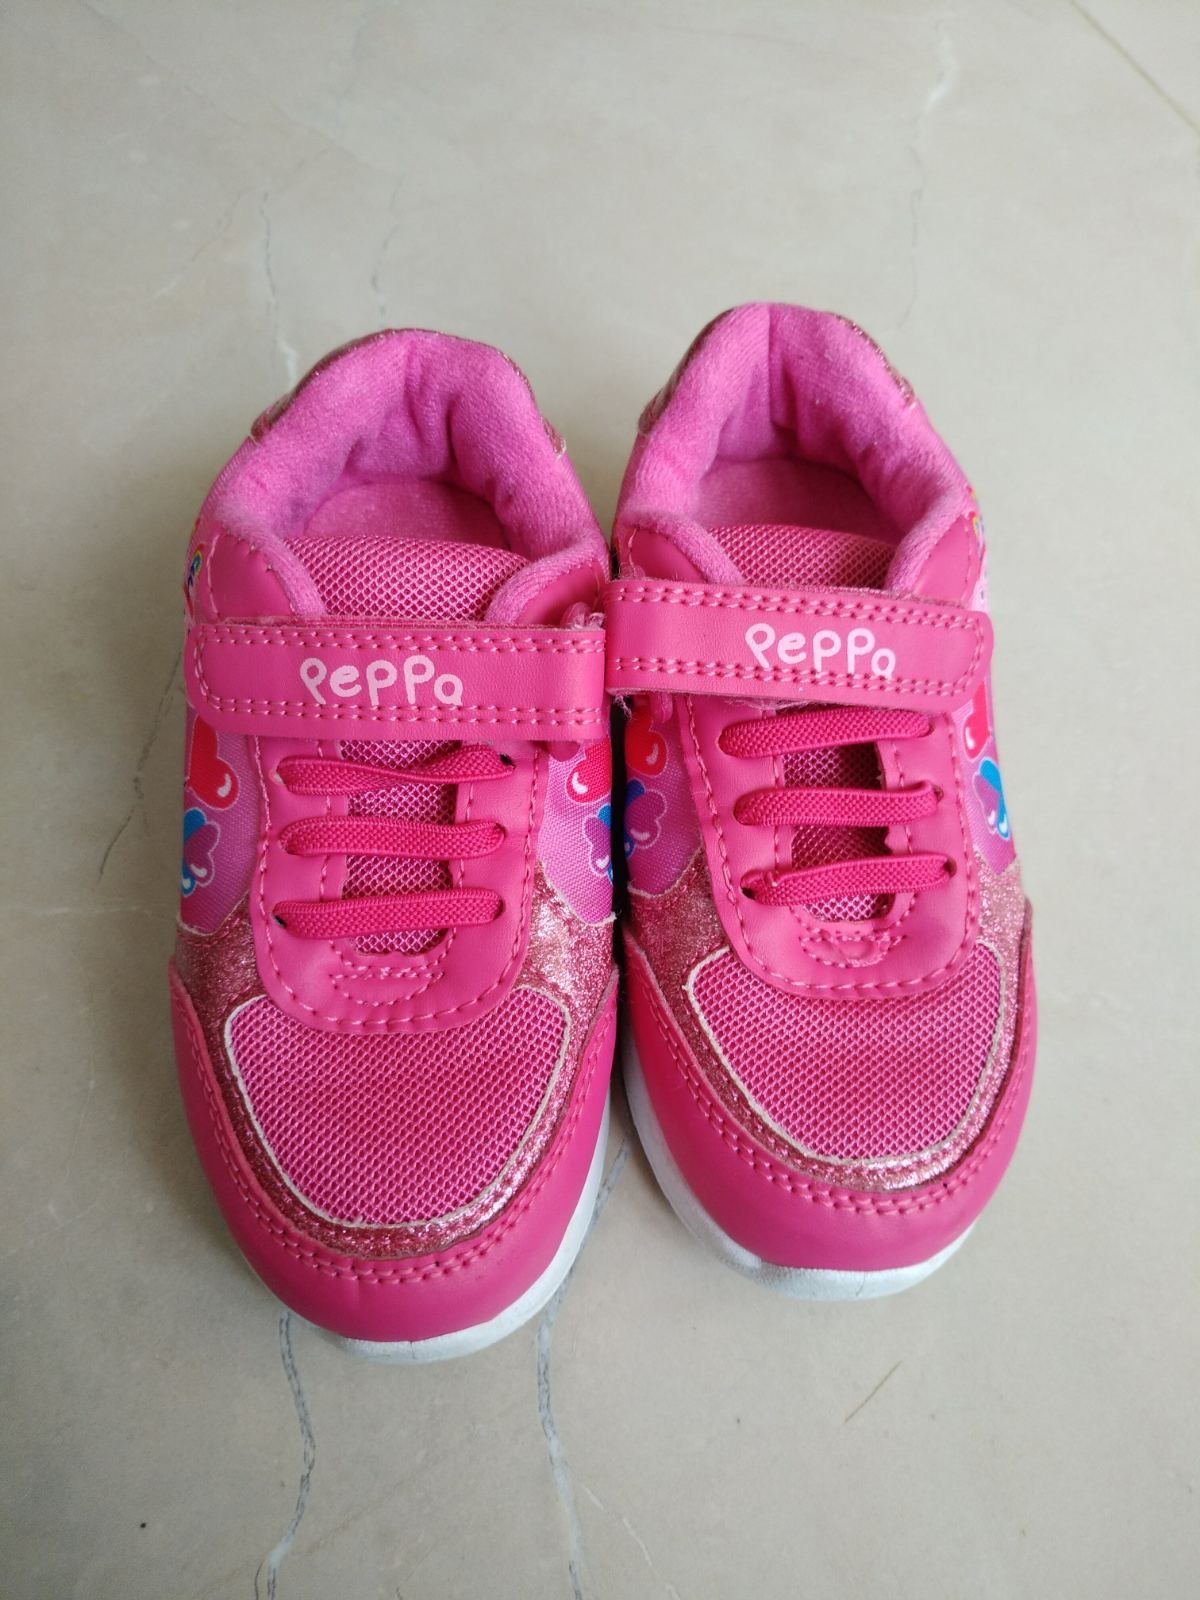 Peppa кроссовки для девочки на липучке детские кросівки для дівчаток д